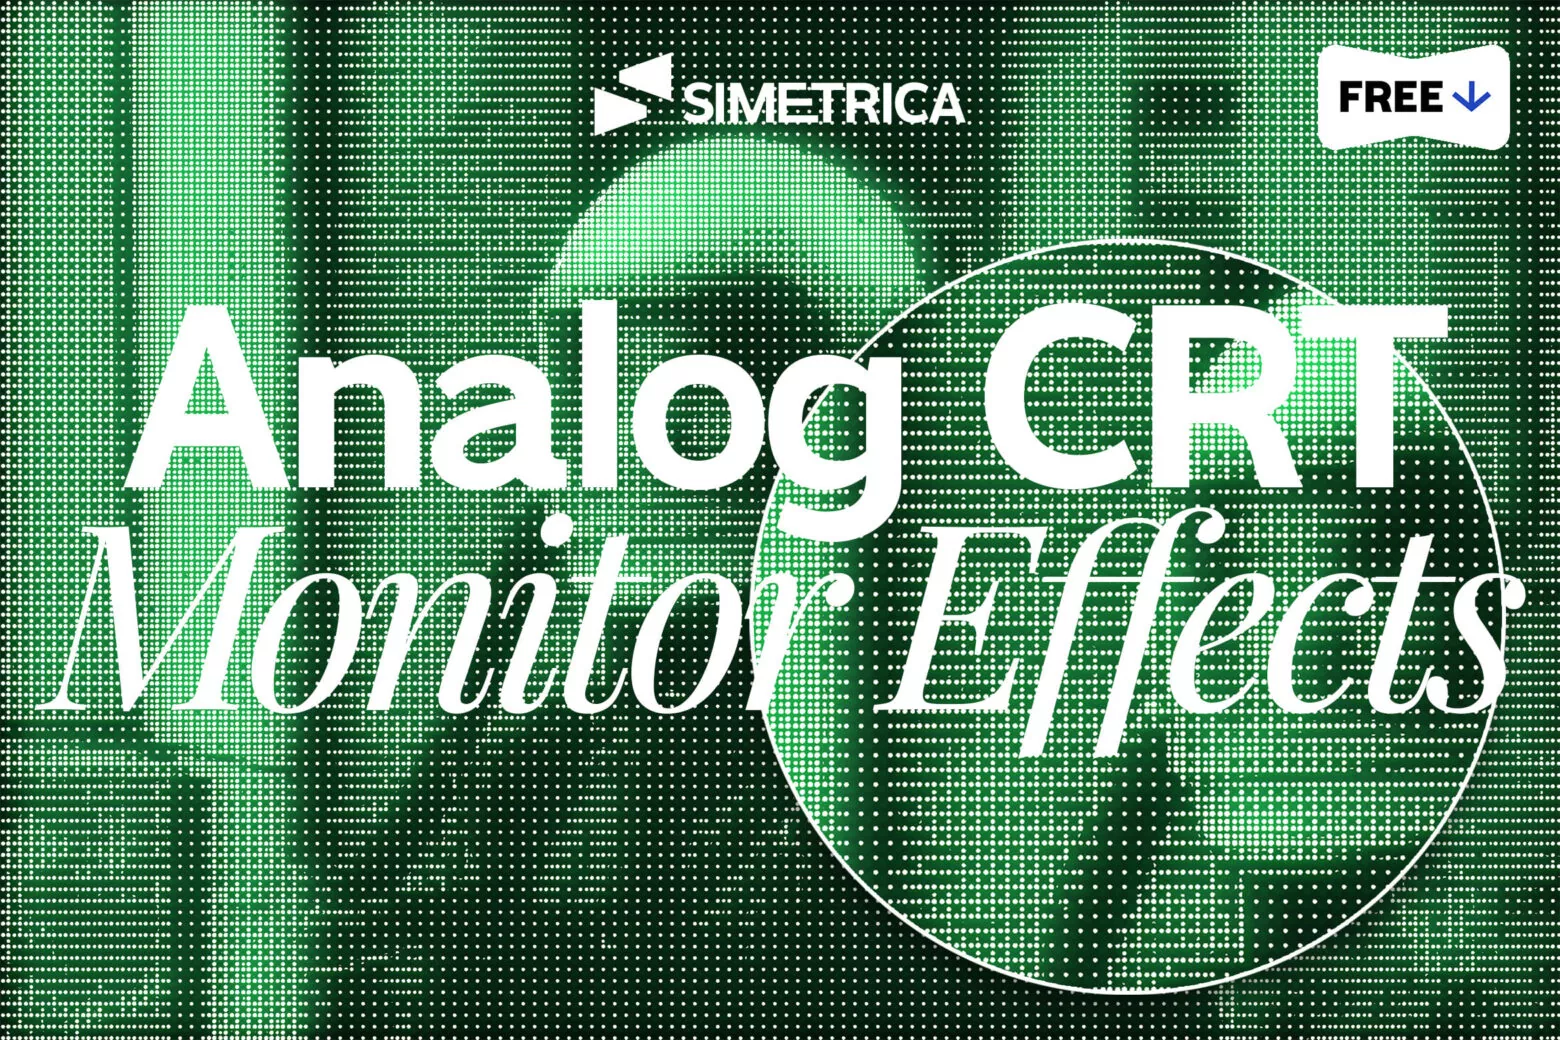 Retro Analog CRT Monitor Effects